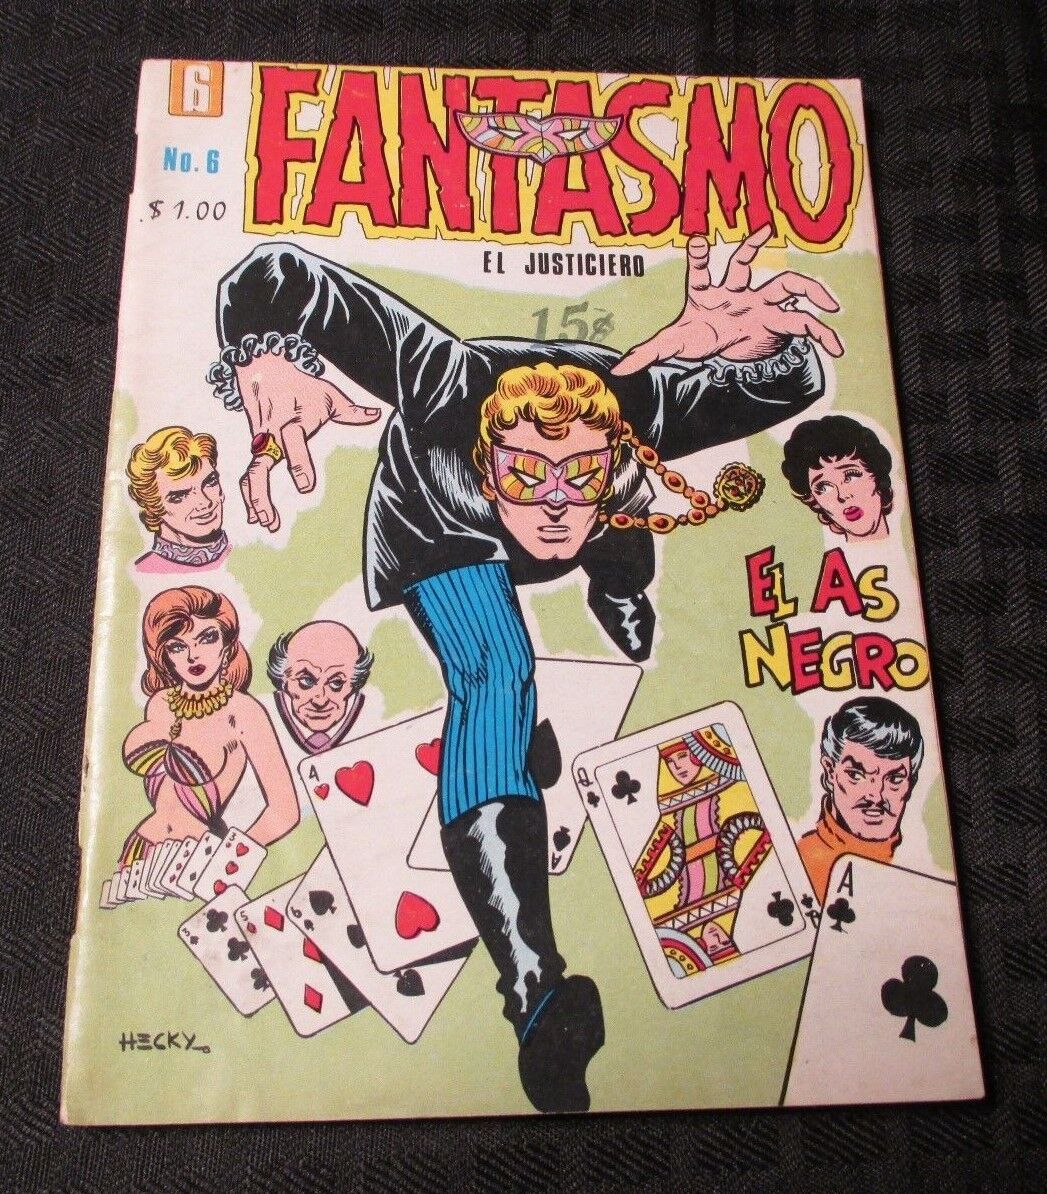 1969 FANTASMO El Justiciero #6 Spanish Foreign Comicbook Digest FN+ B&W 64p RARE